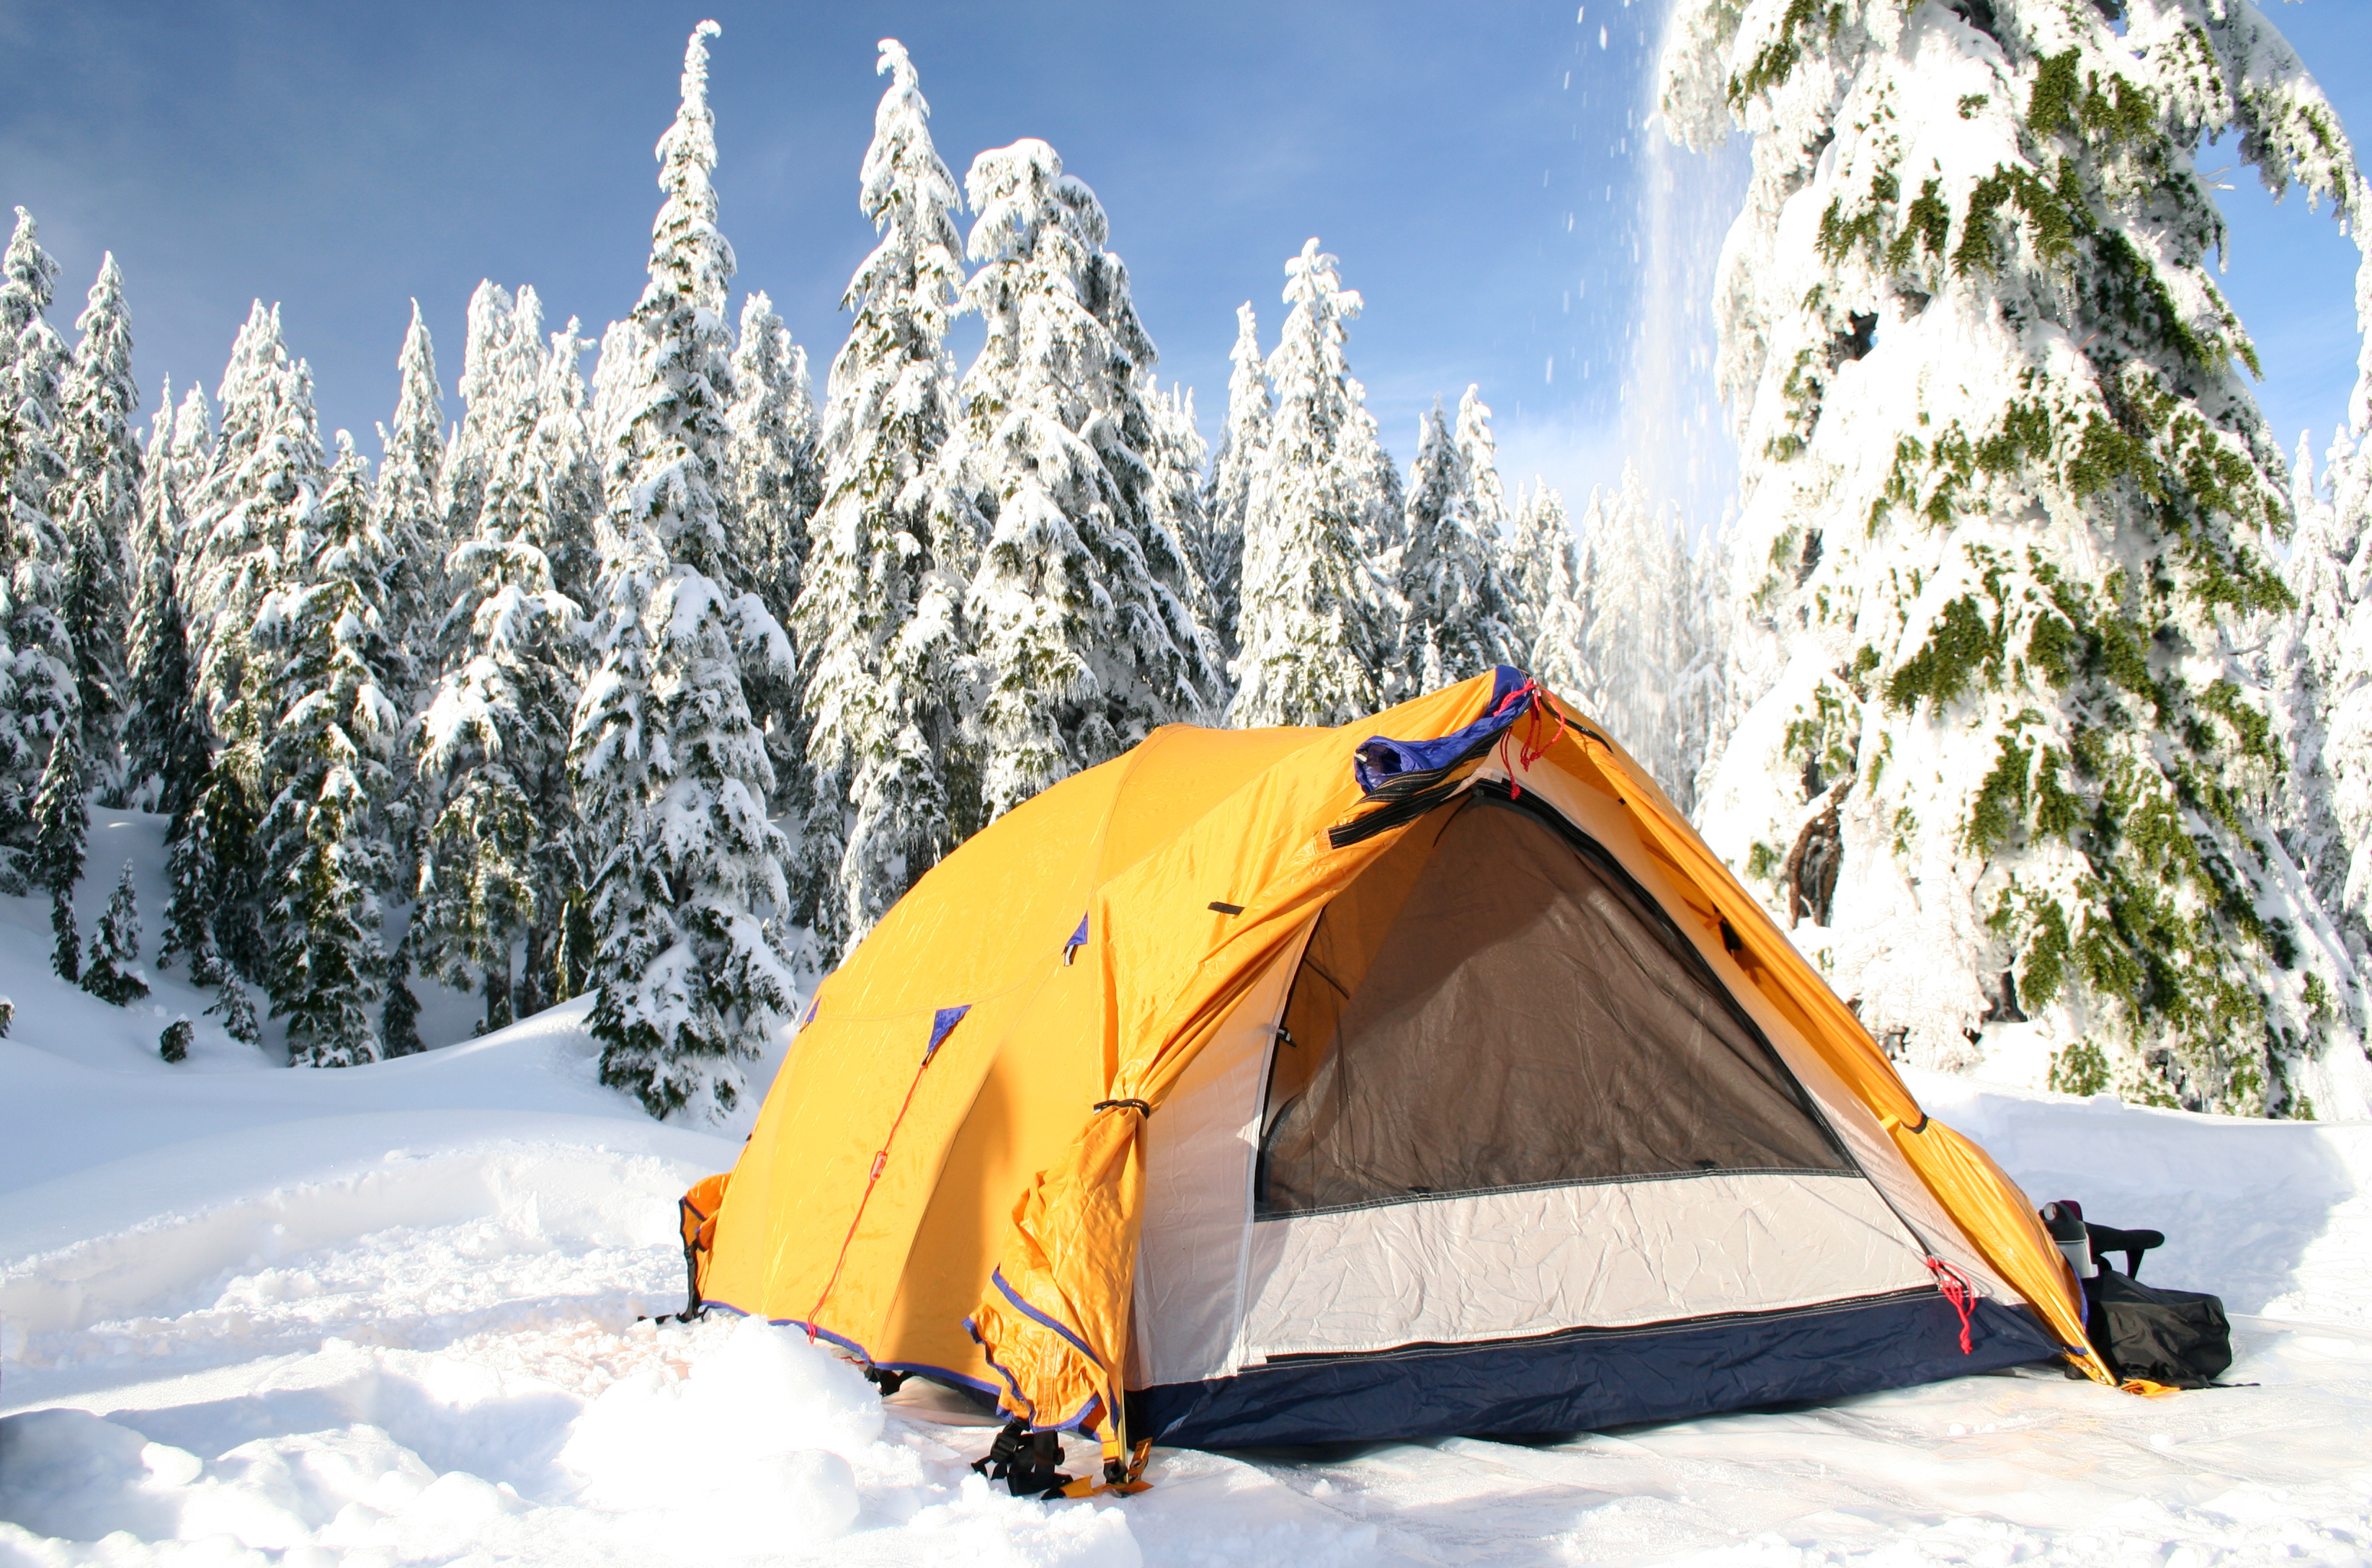 Only camping. Best Camp Ontario 3 палатка. Палатка Nova Tour ай Петри 2 si. Палатка Alaska Trek 2. Палатка Полярис зимняя.